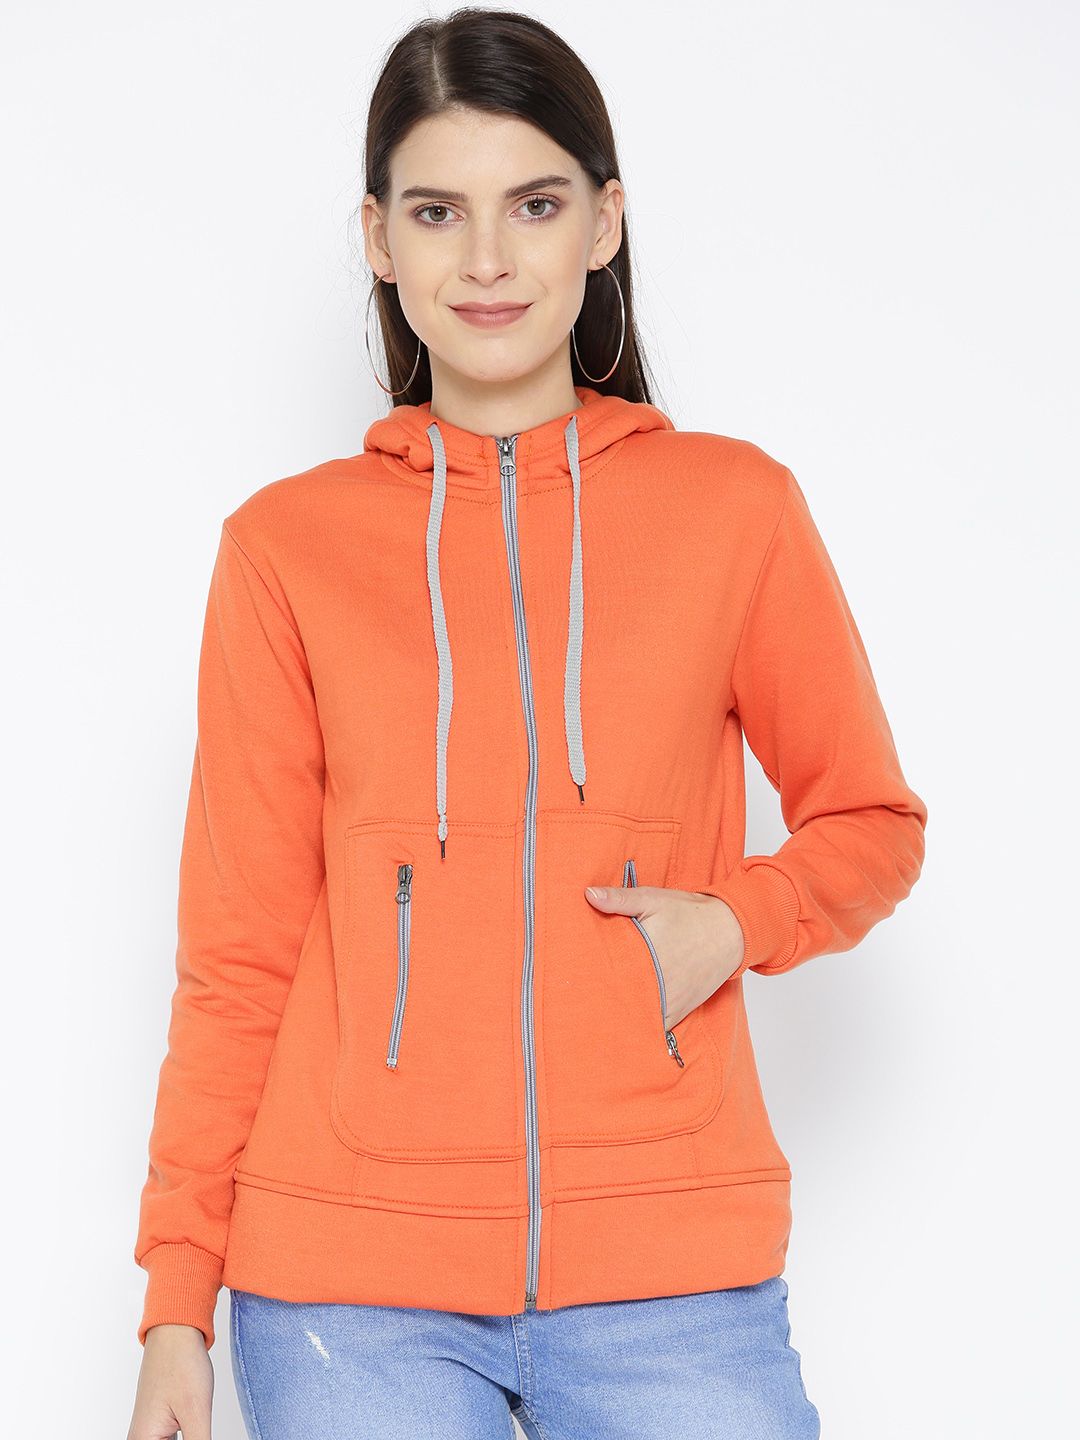 Belle Fille Women Orange Solid Hooded Sweatshirt Price in India